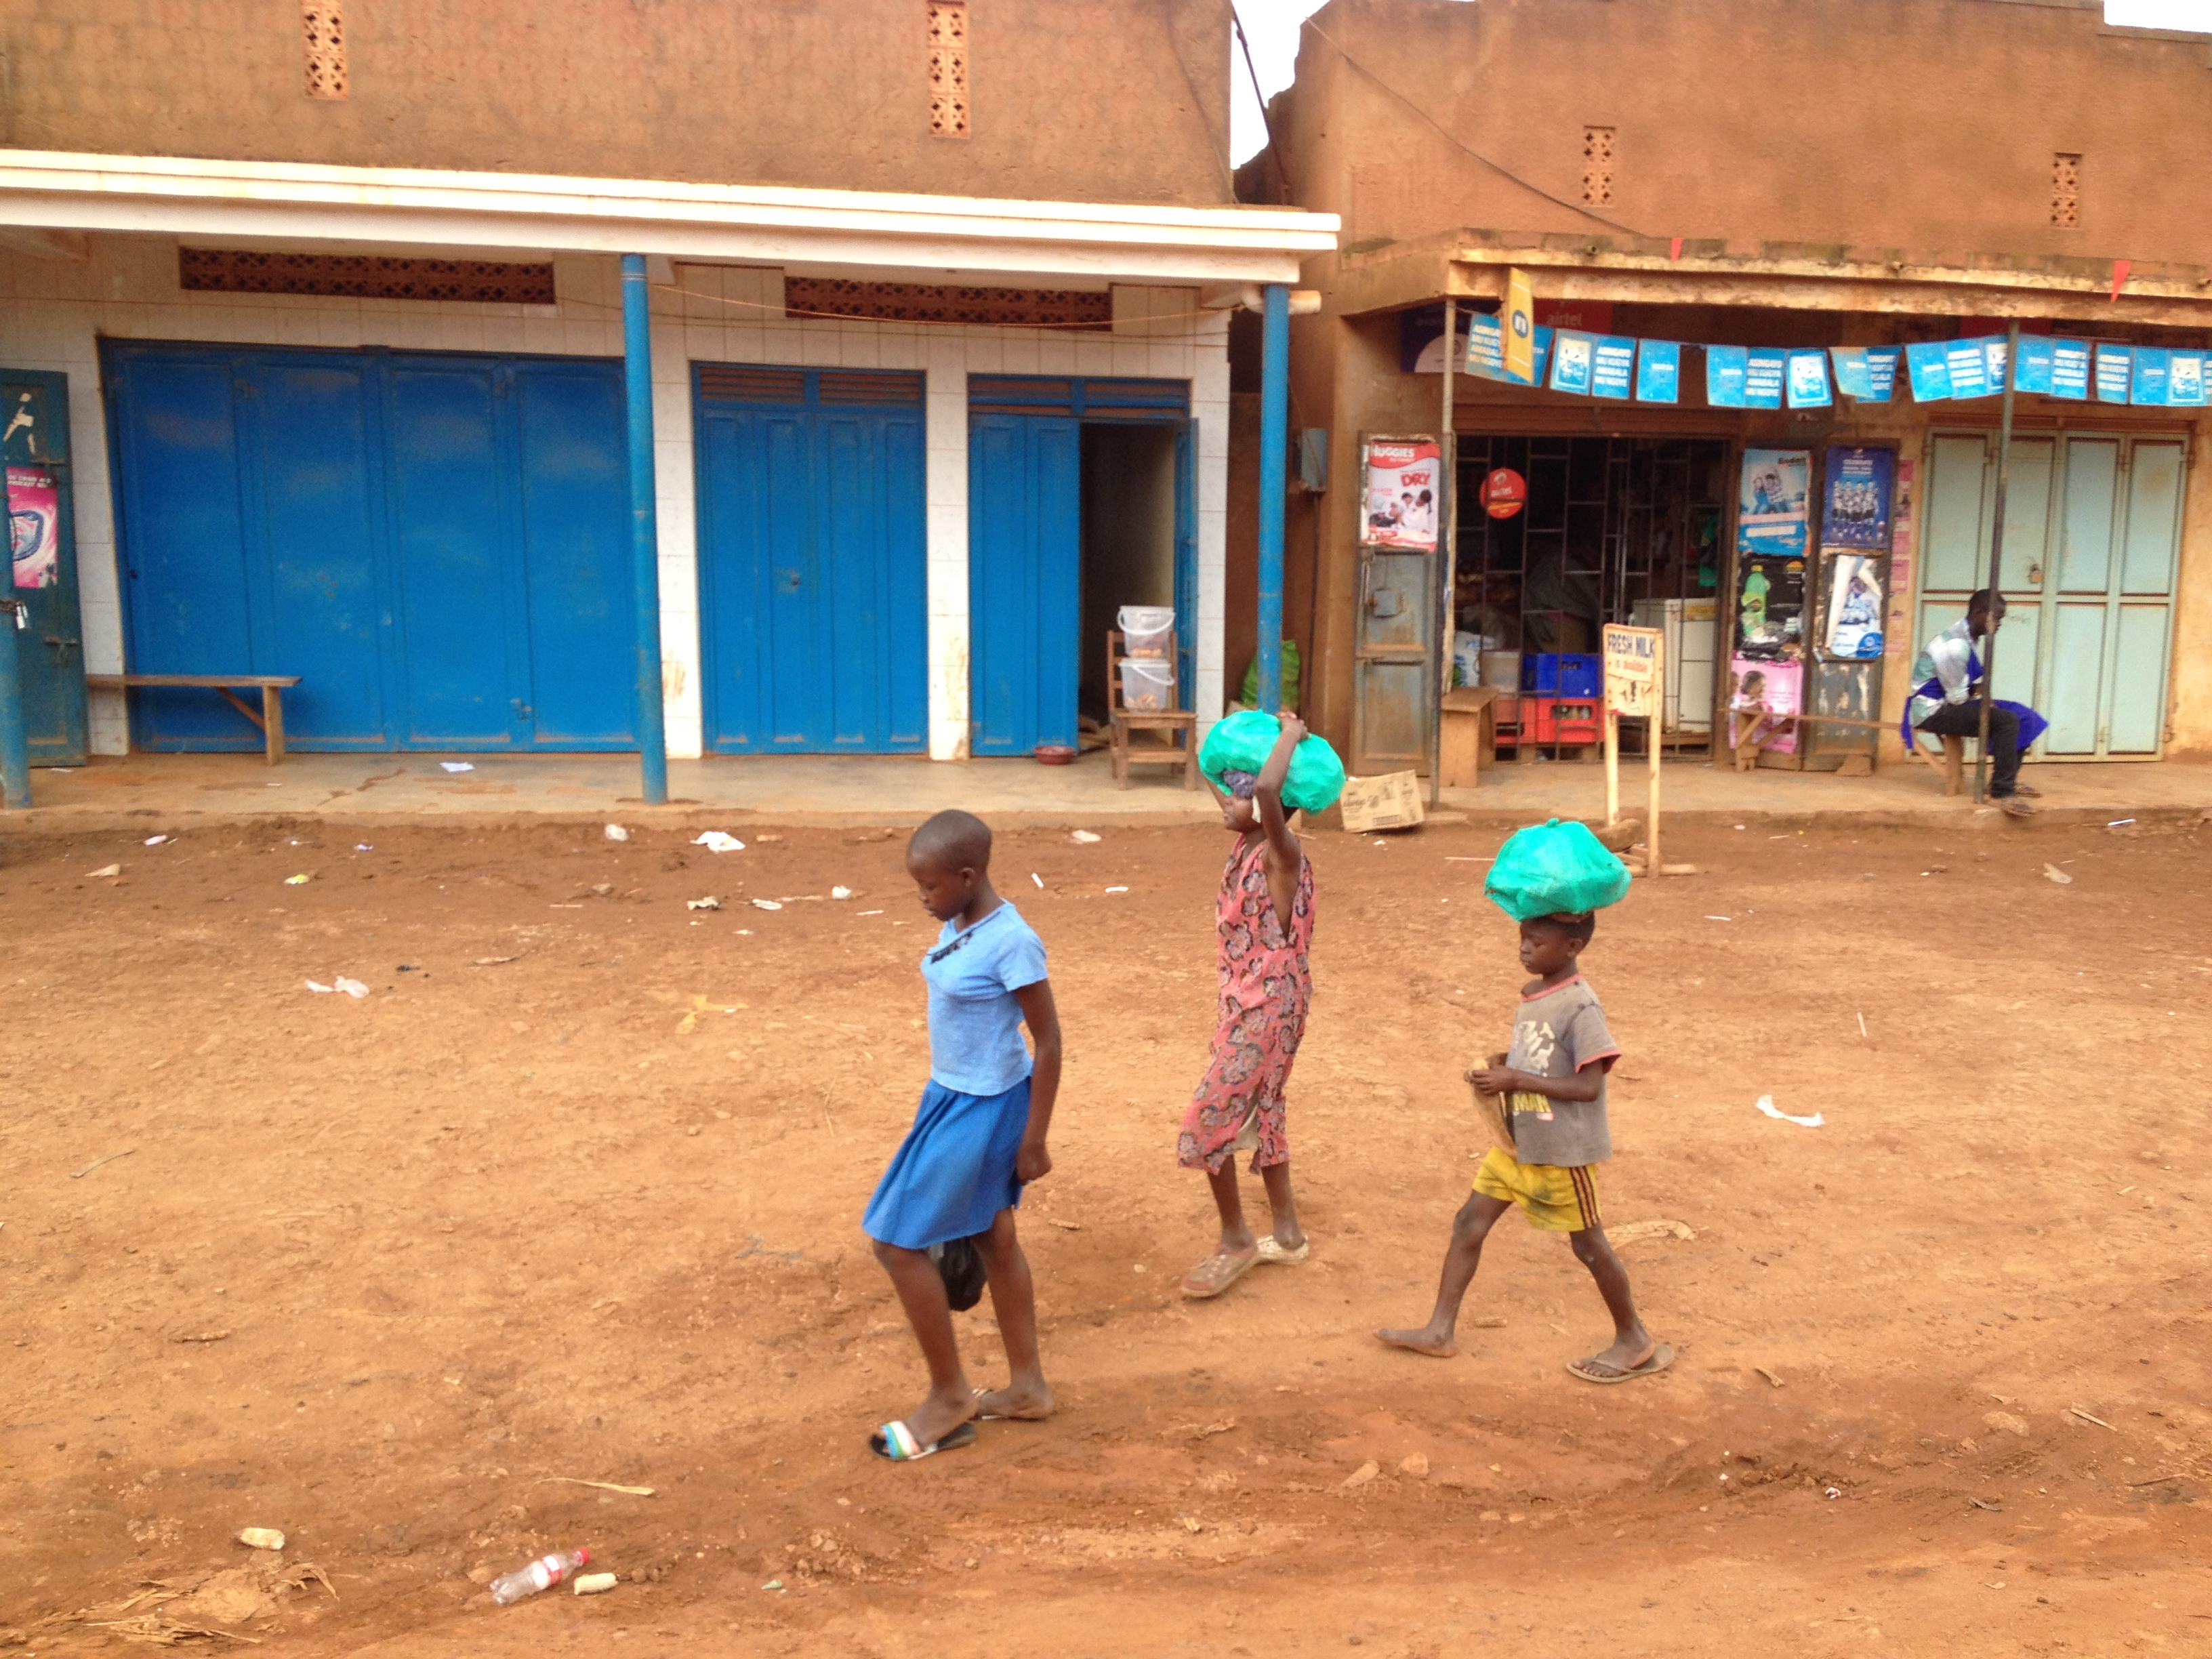 Nearby Kampala, Uganda - 2014